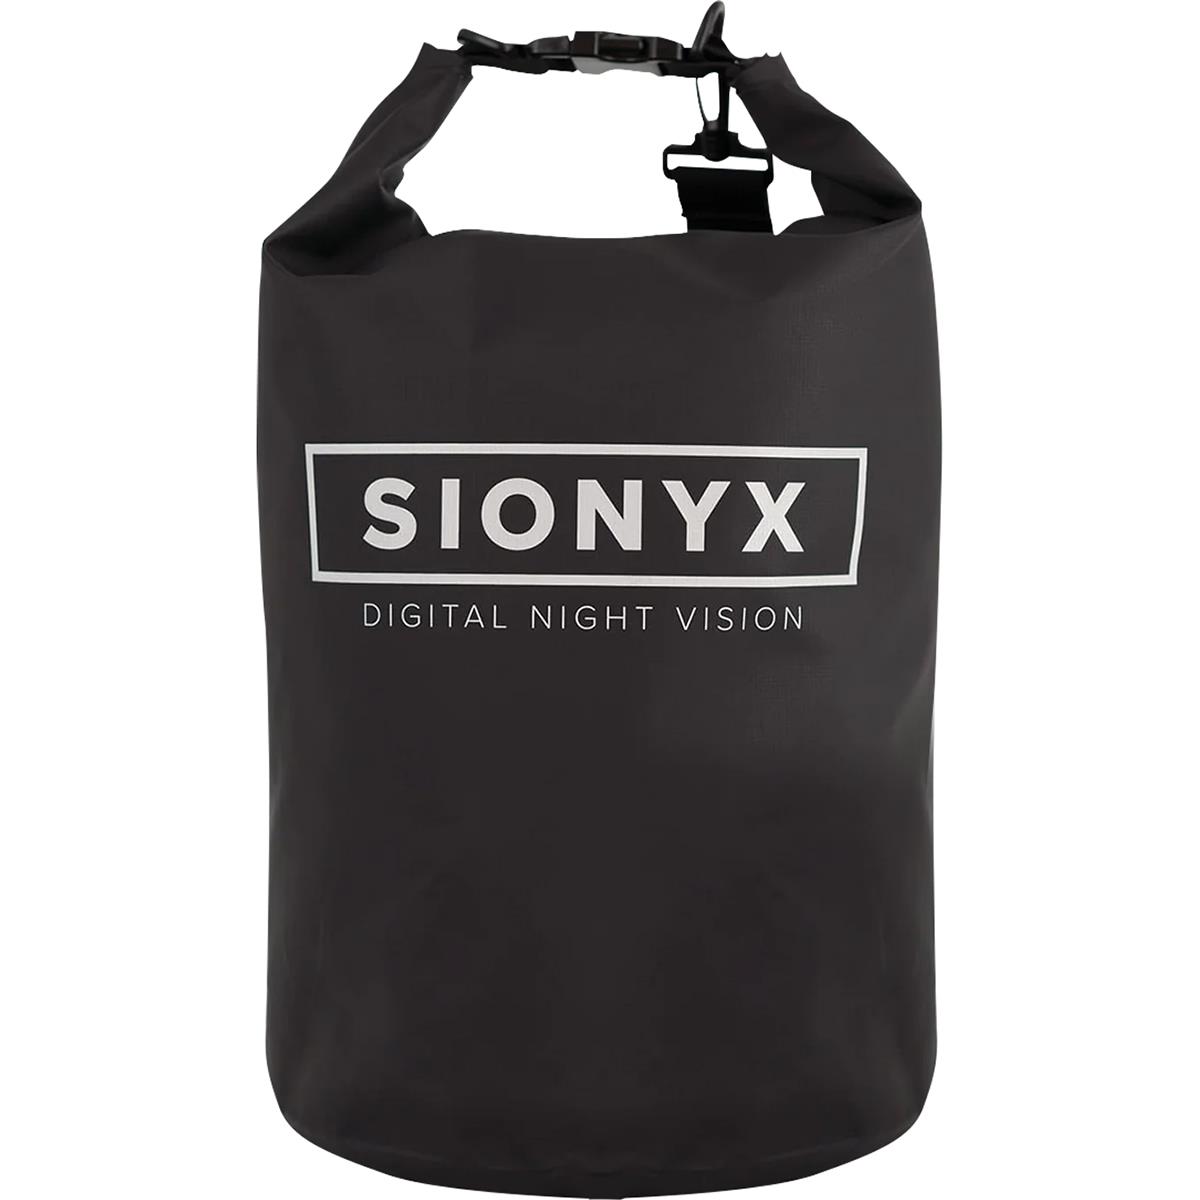 Image of SiOnyx 20L Waterproof Dry Bag